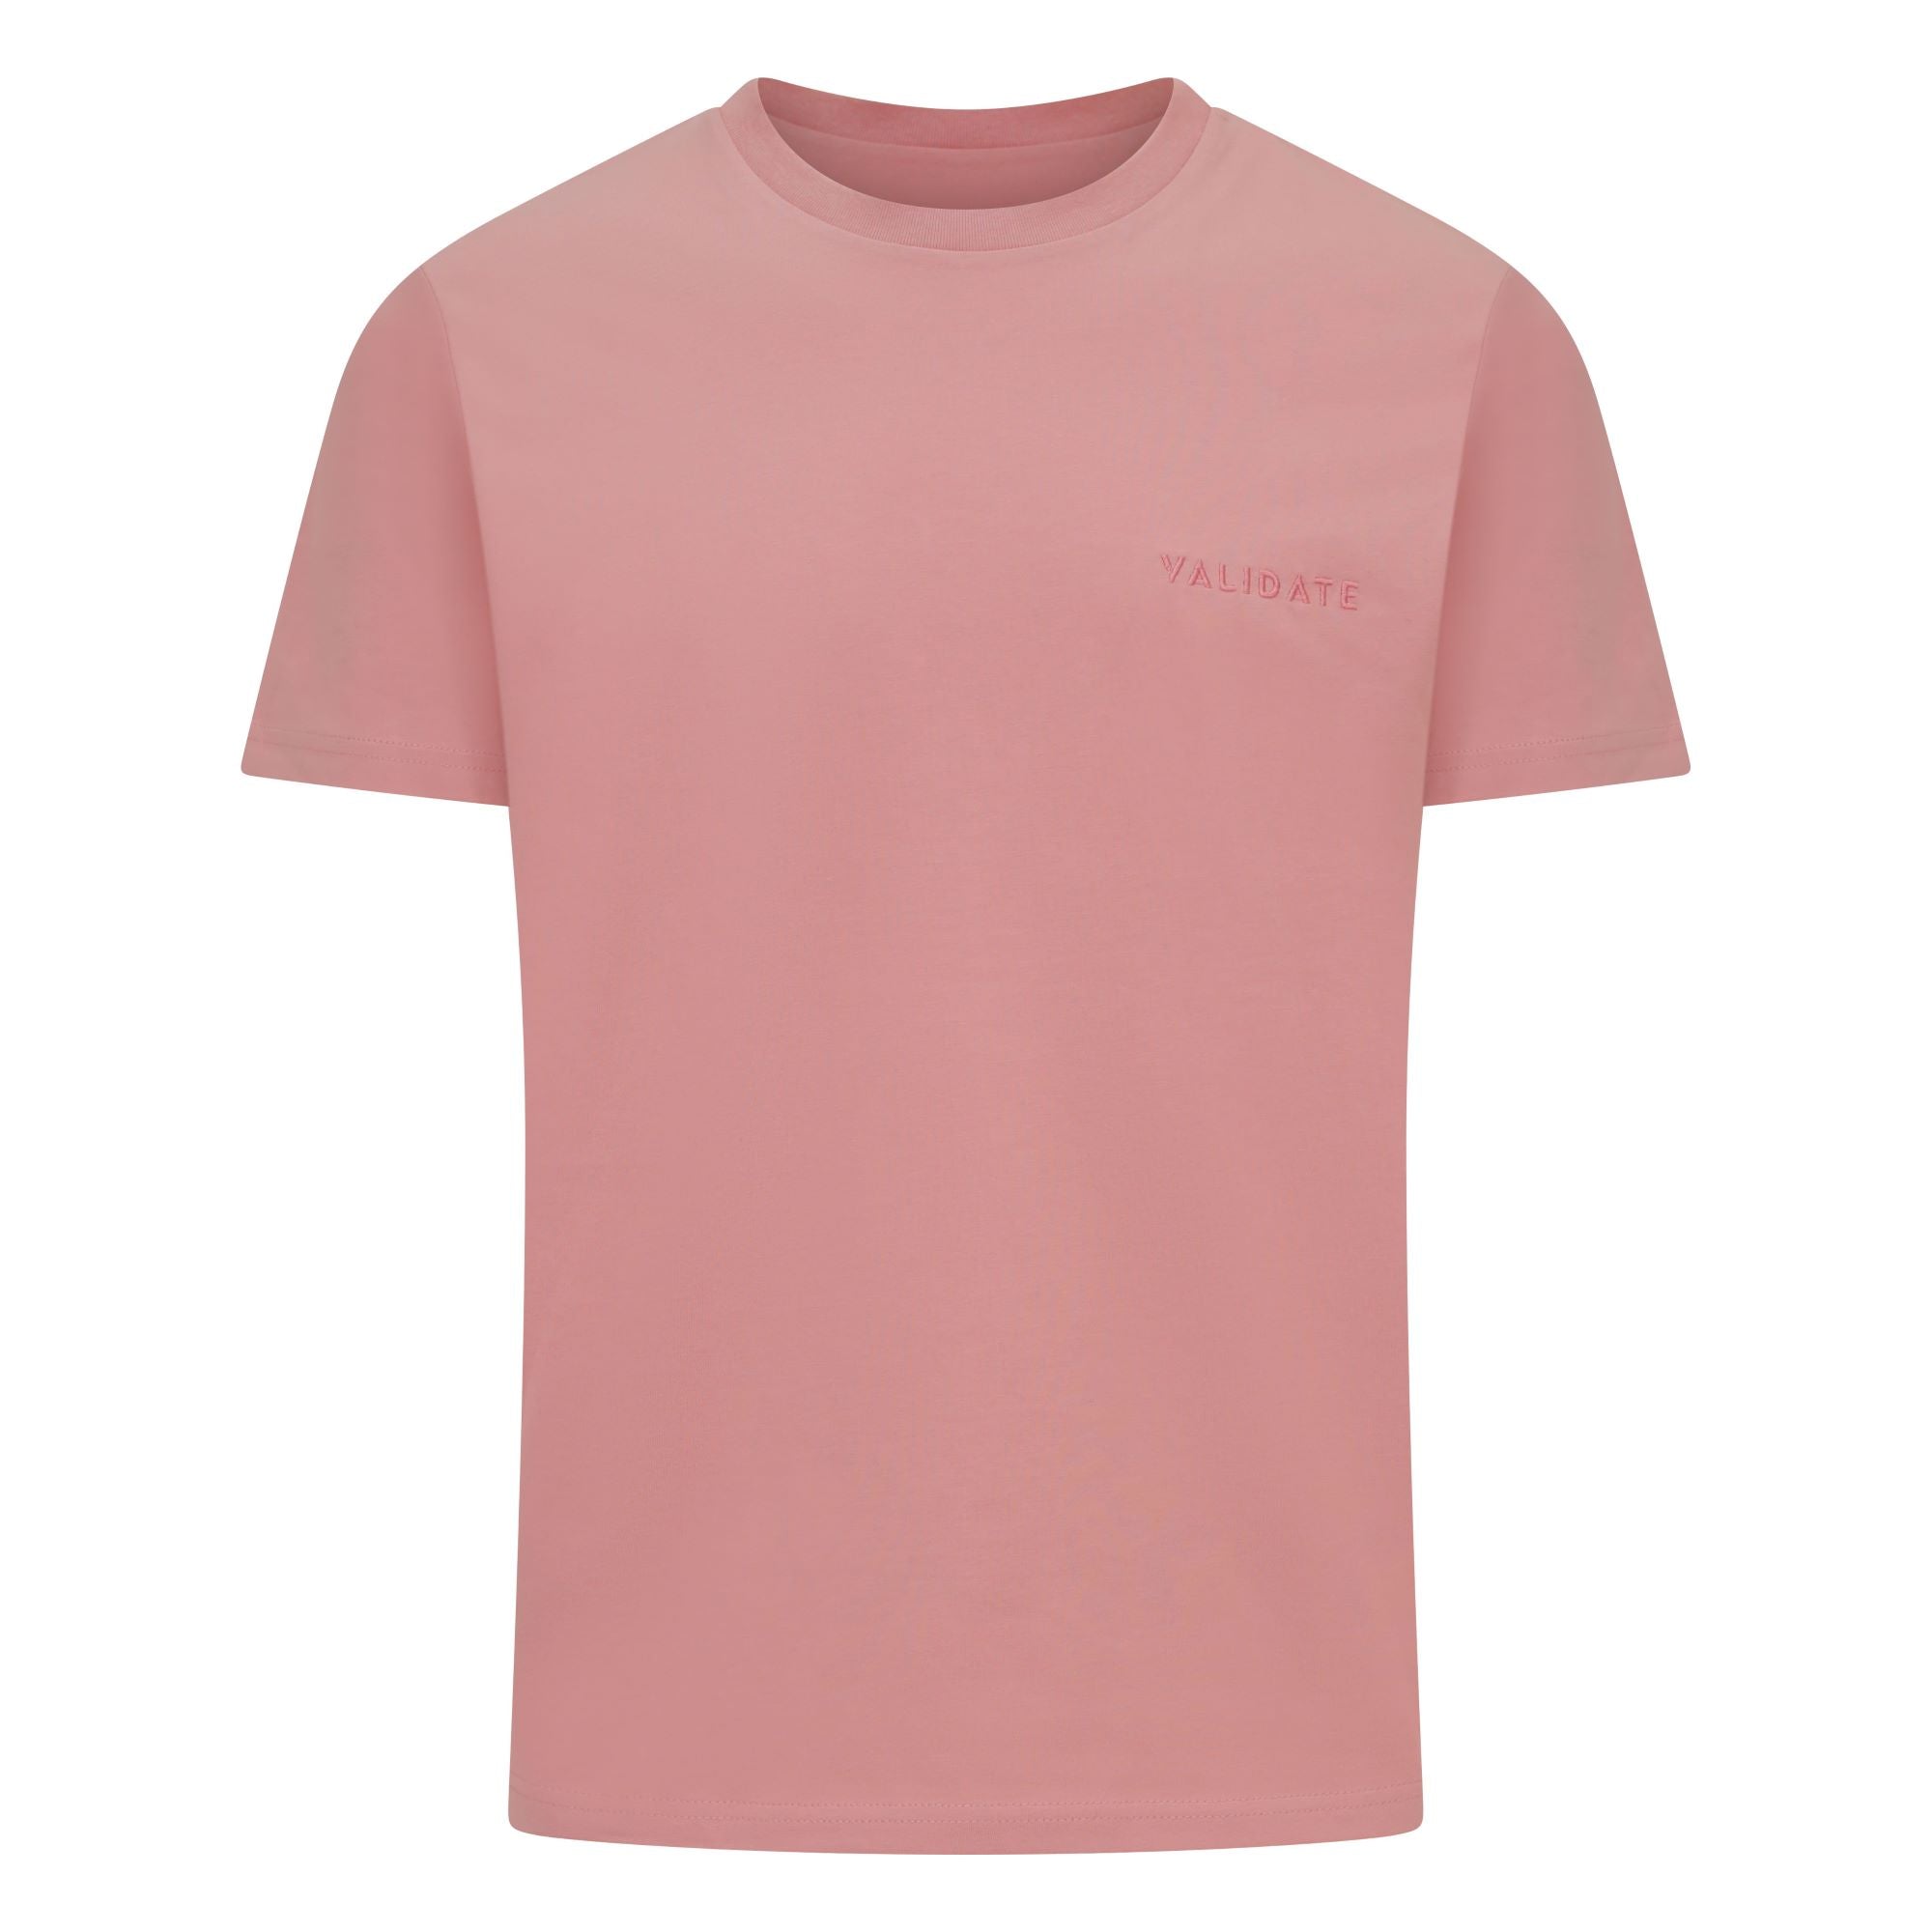 Validate Core Essentials Men's Tshirt Canyon Pink